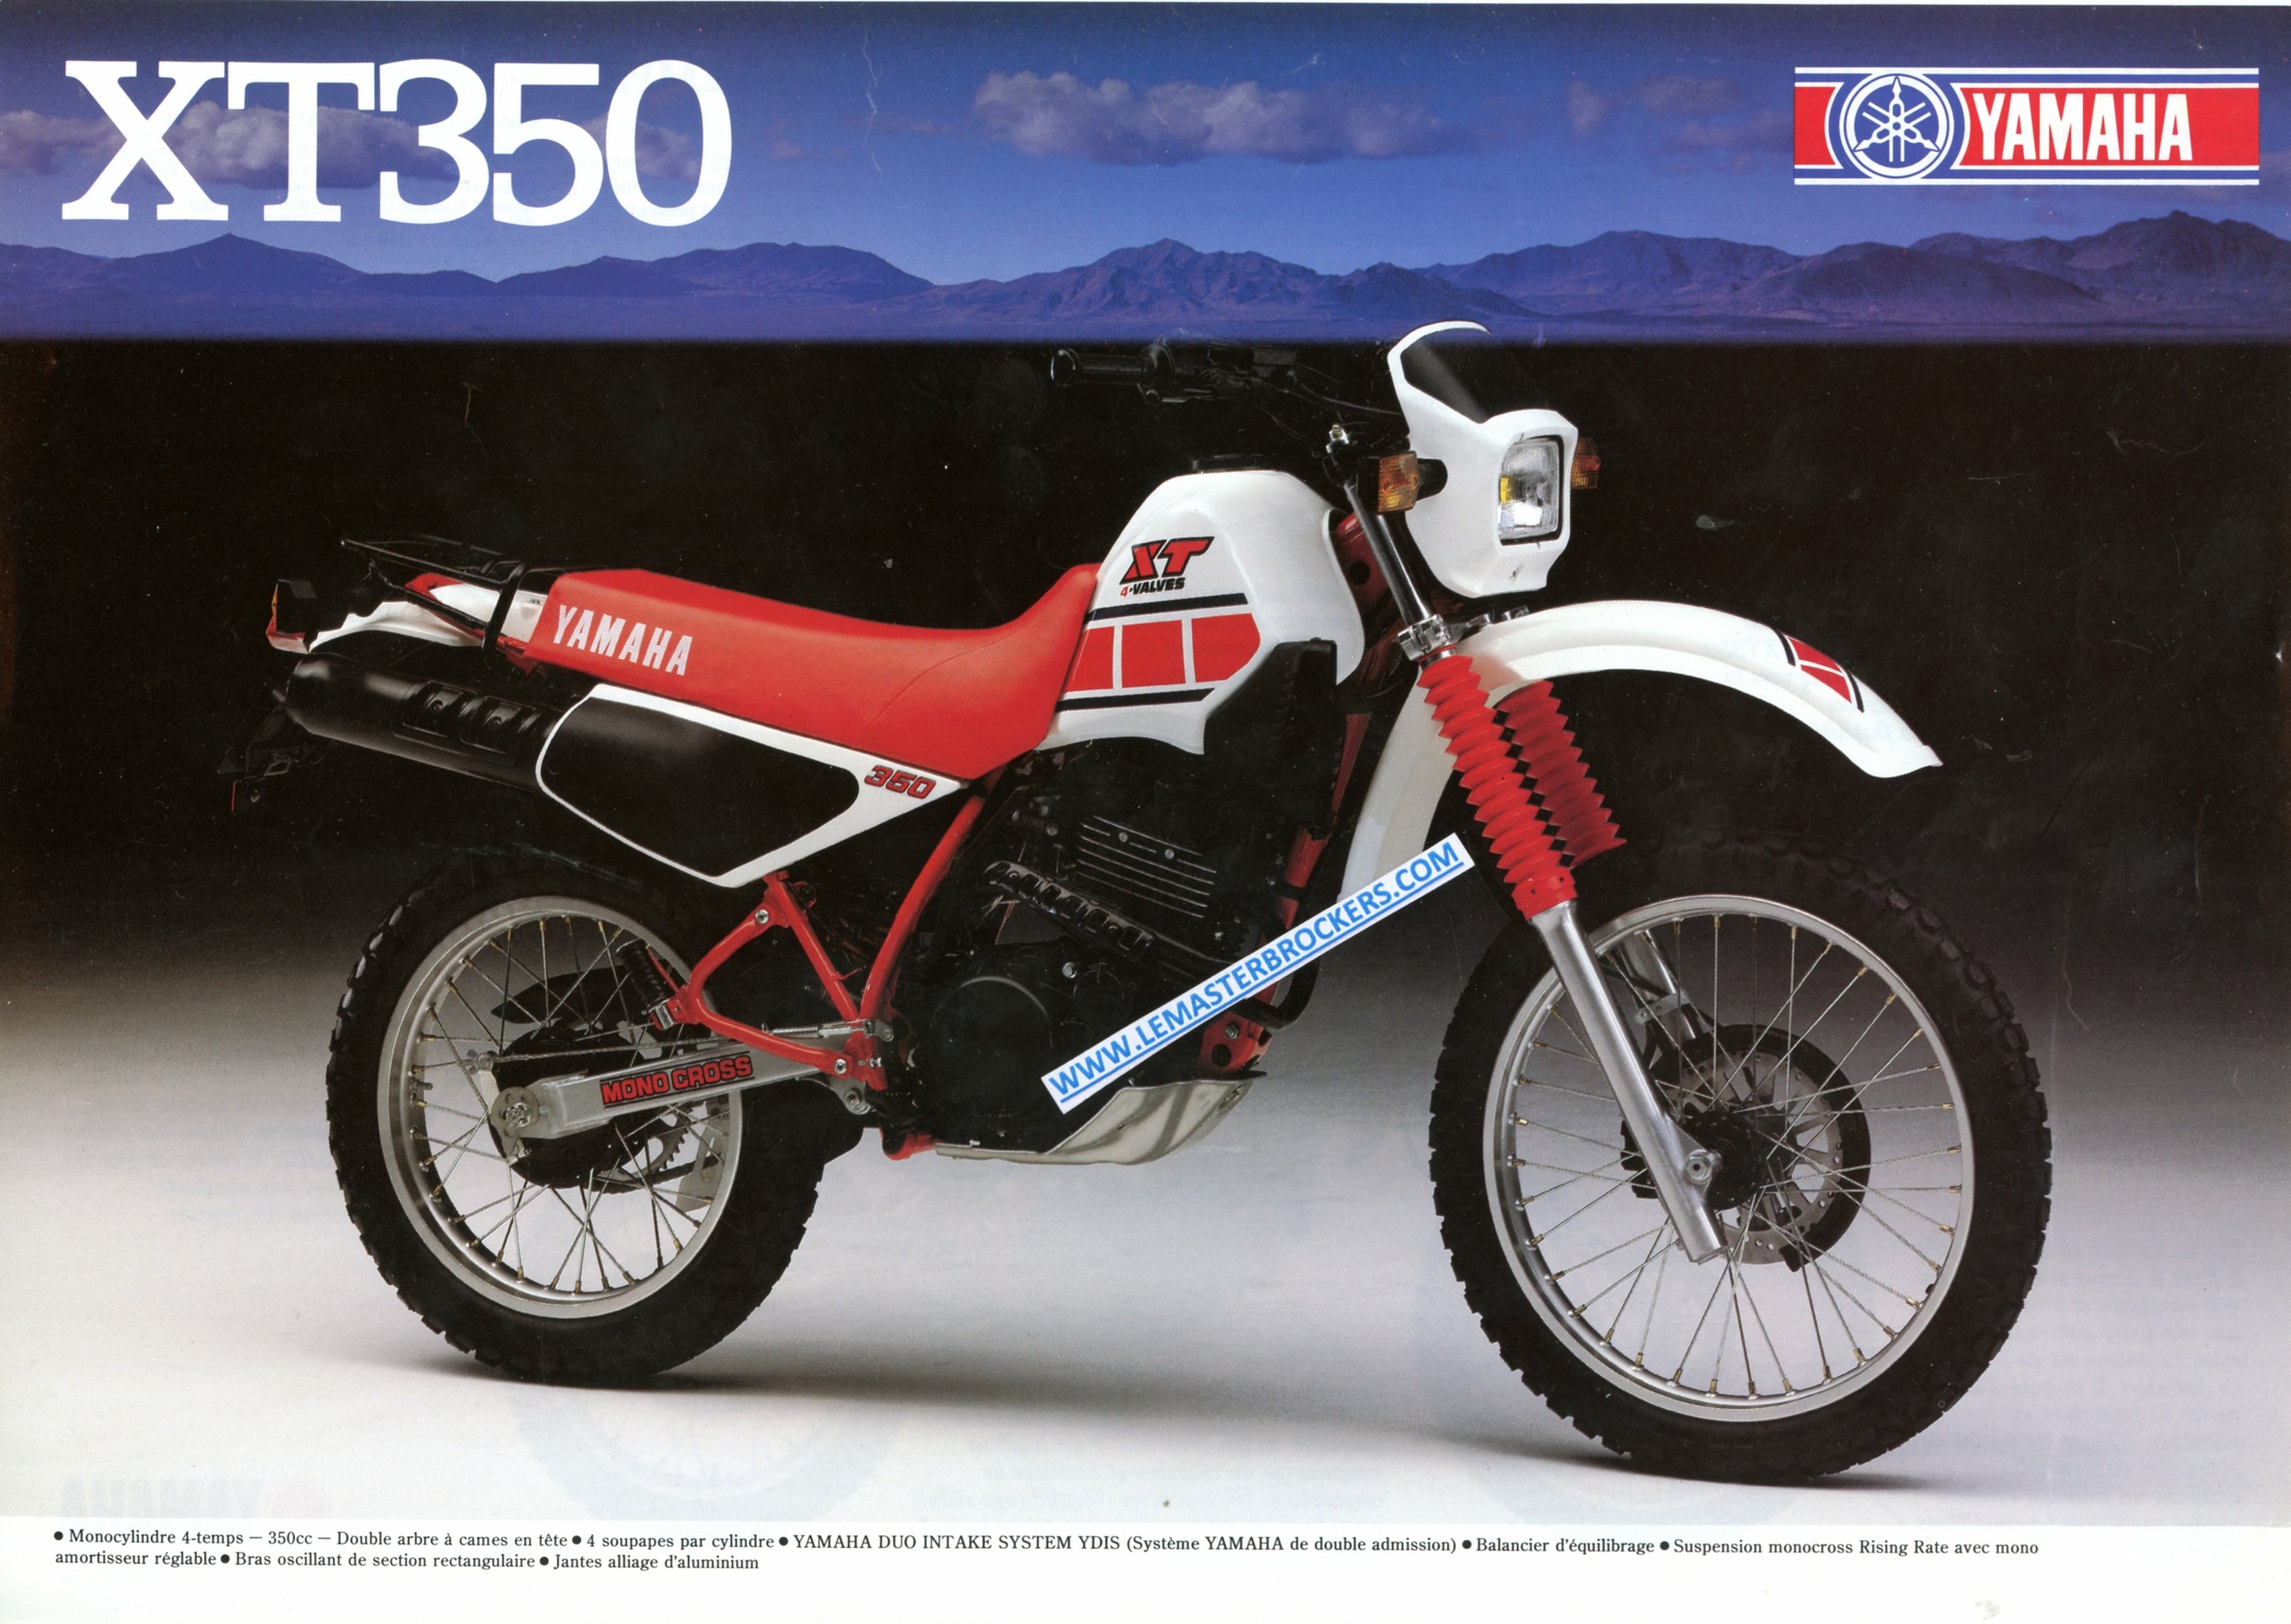 PROSPECTUS-MOTO-YAMAHA-XT-350-XT350-1985-LEMASTERBROCKERS-BROCHURE-MOTORCYCLES